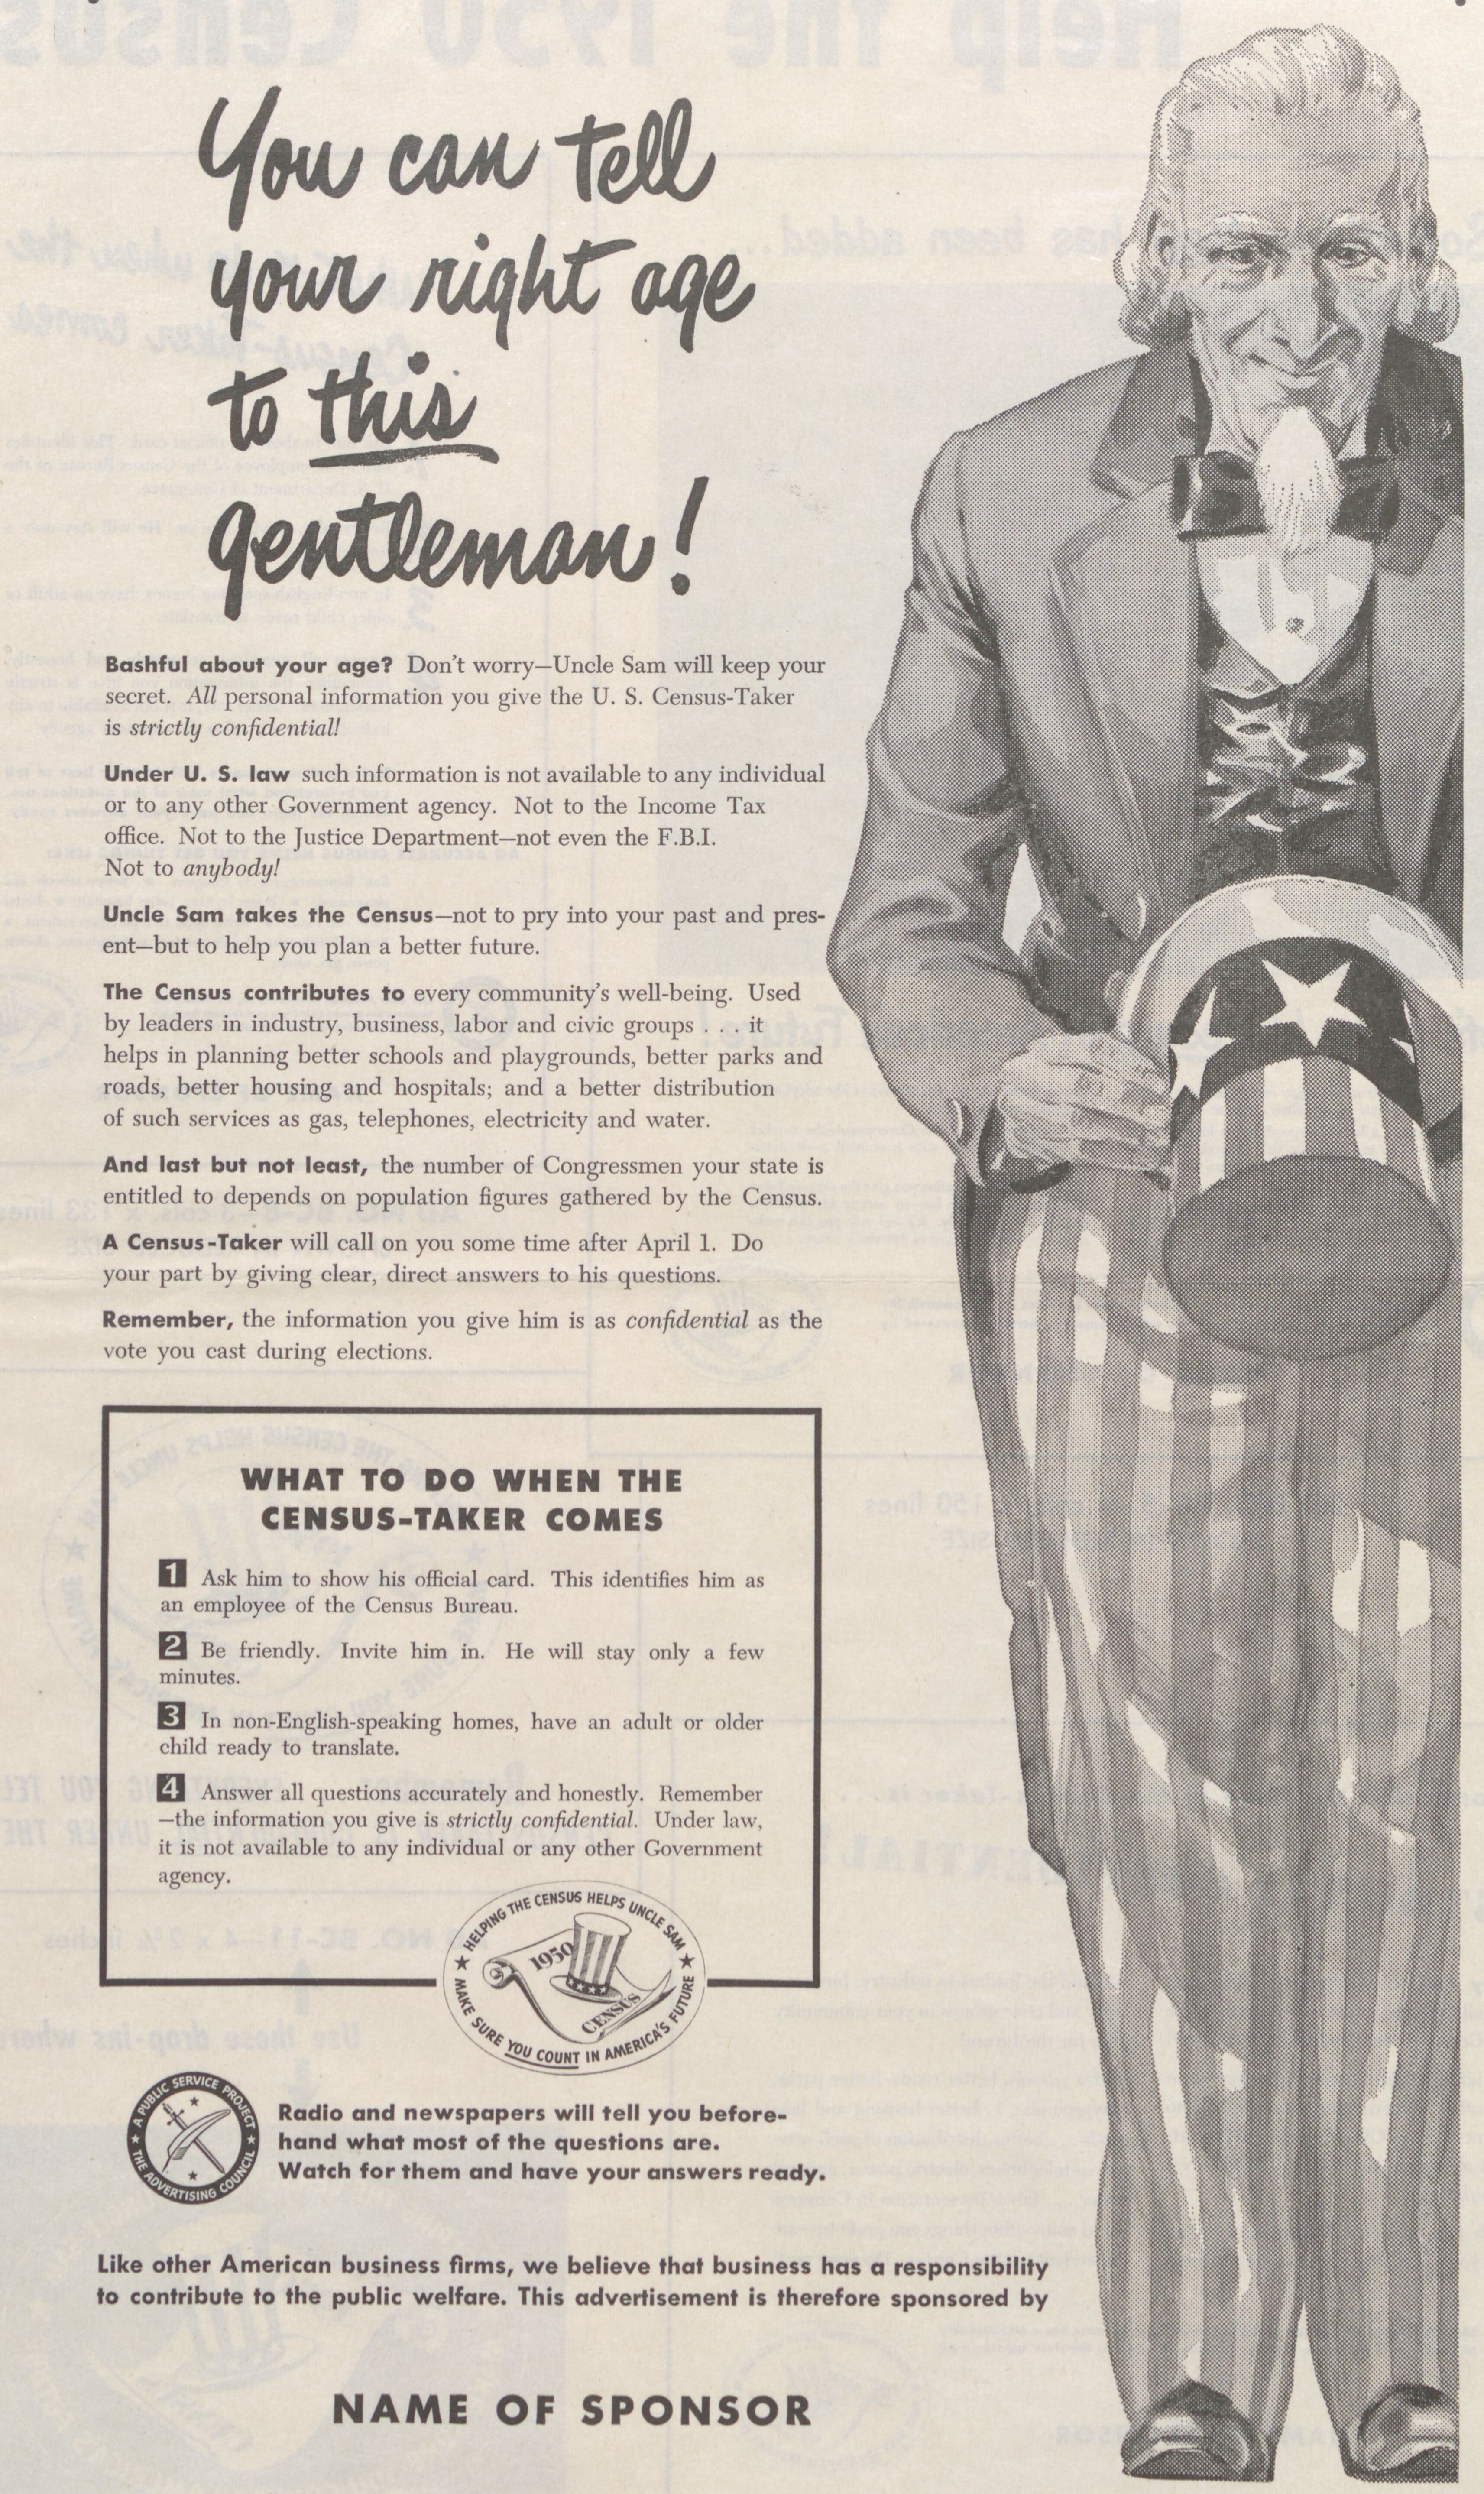 1950 Census confidentiality advertisement